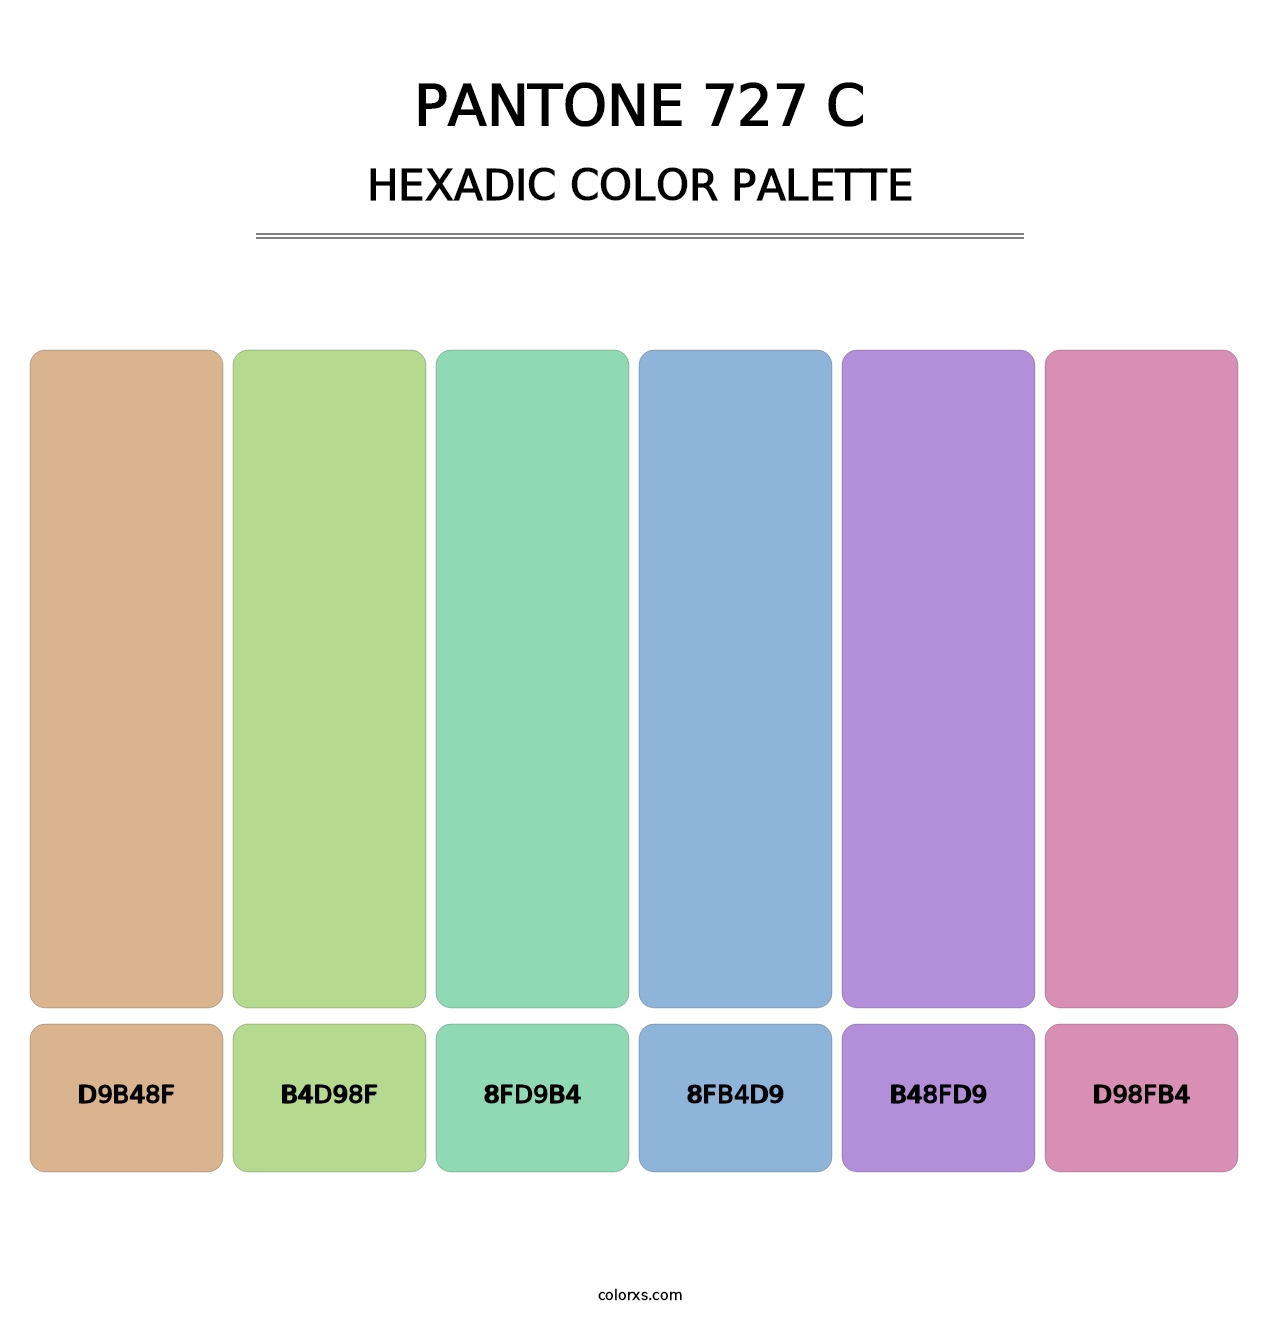 PANTONE 727 C - Hexadic Color Palette